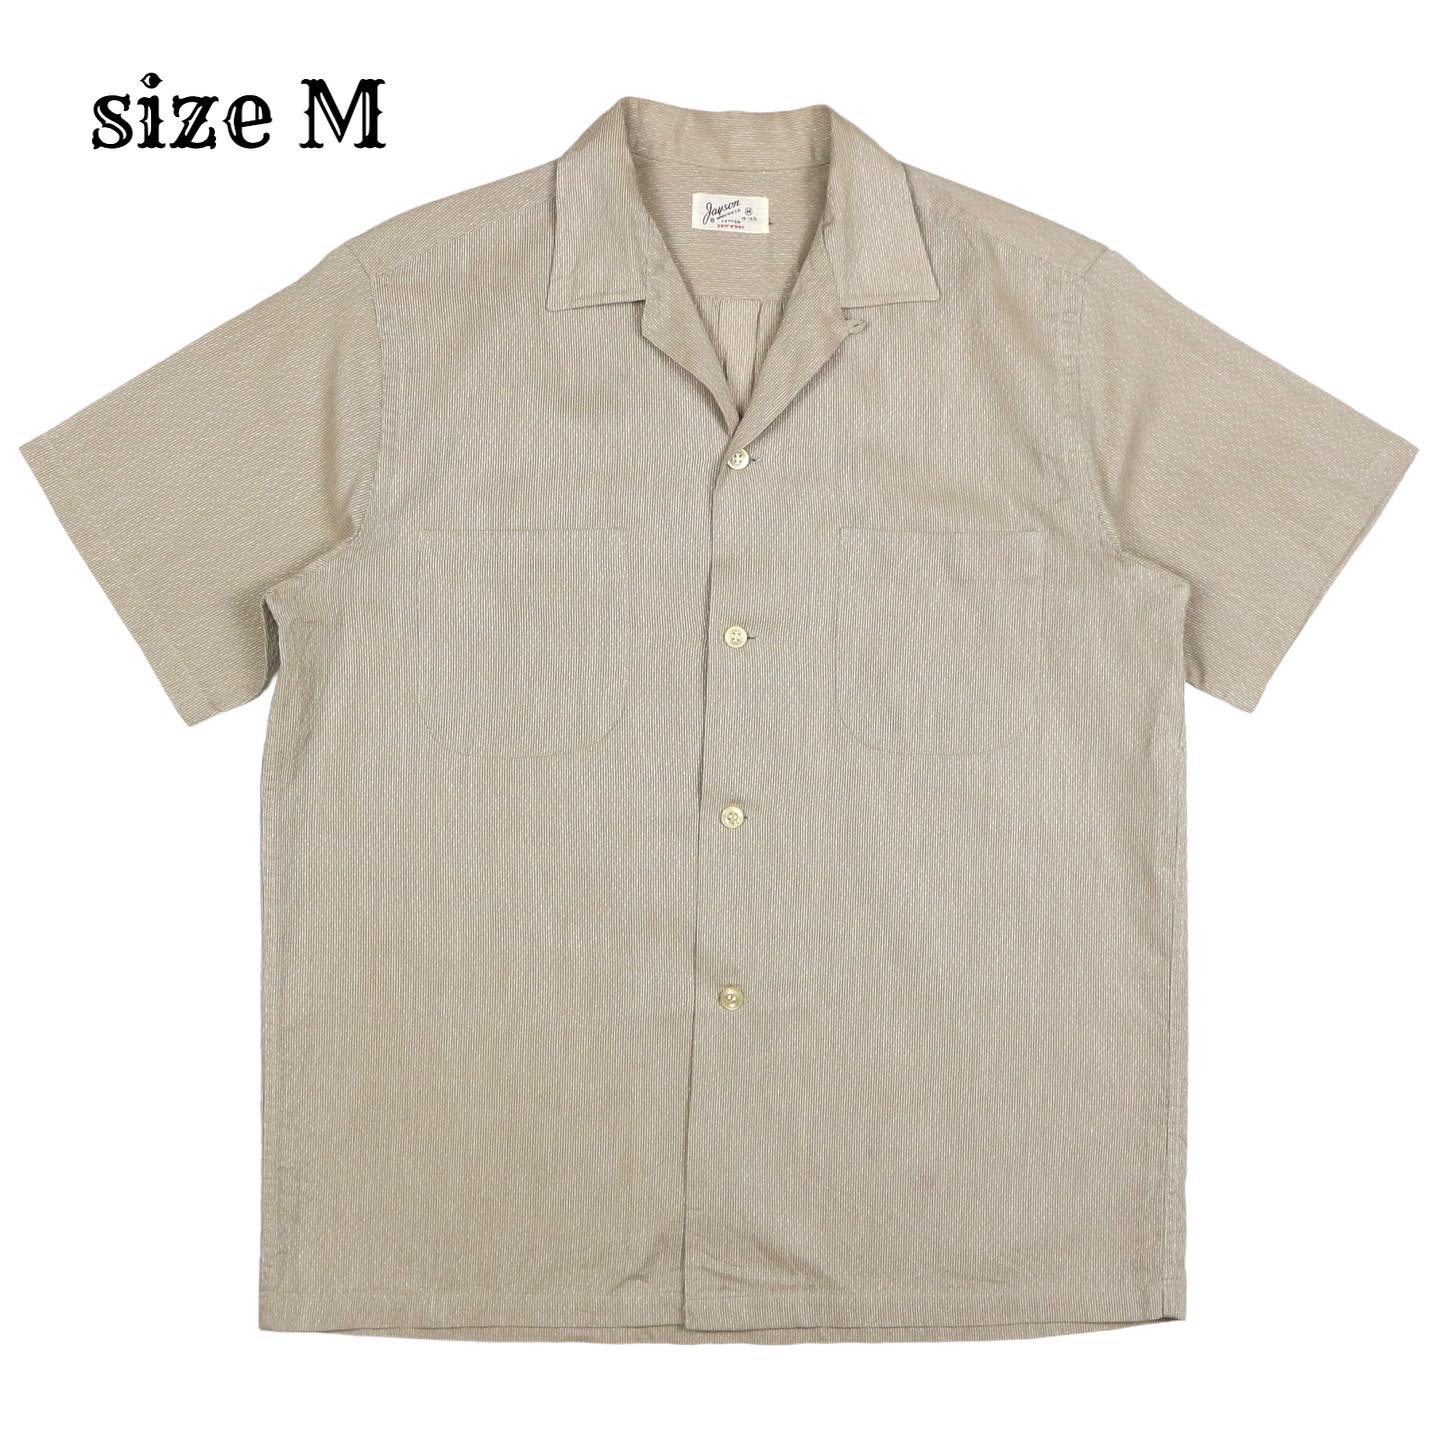 Vintage 60s Jayson Open Collar Shirt Size M